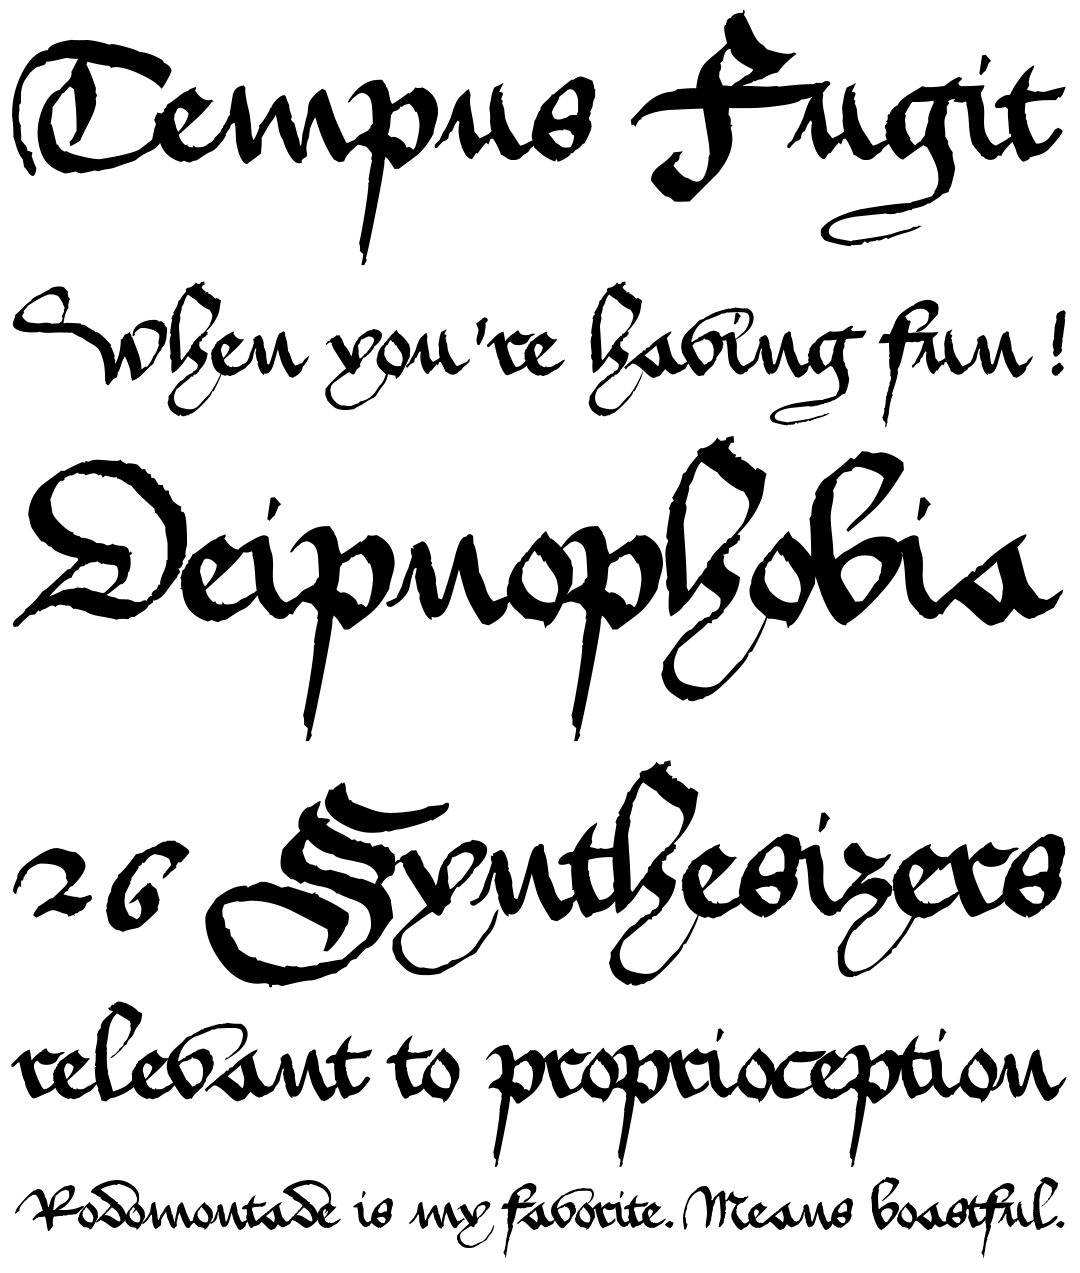 Medieval Old Script Font English Gothic 17th C Font Medieval Font